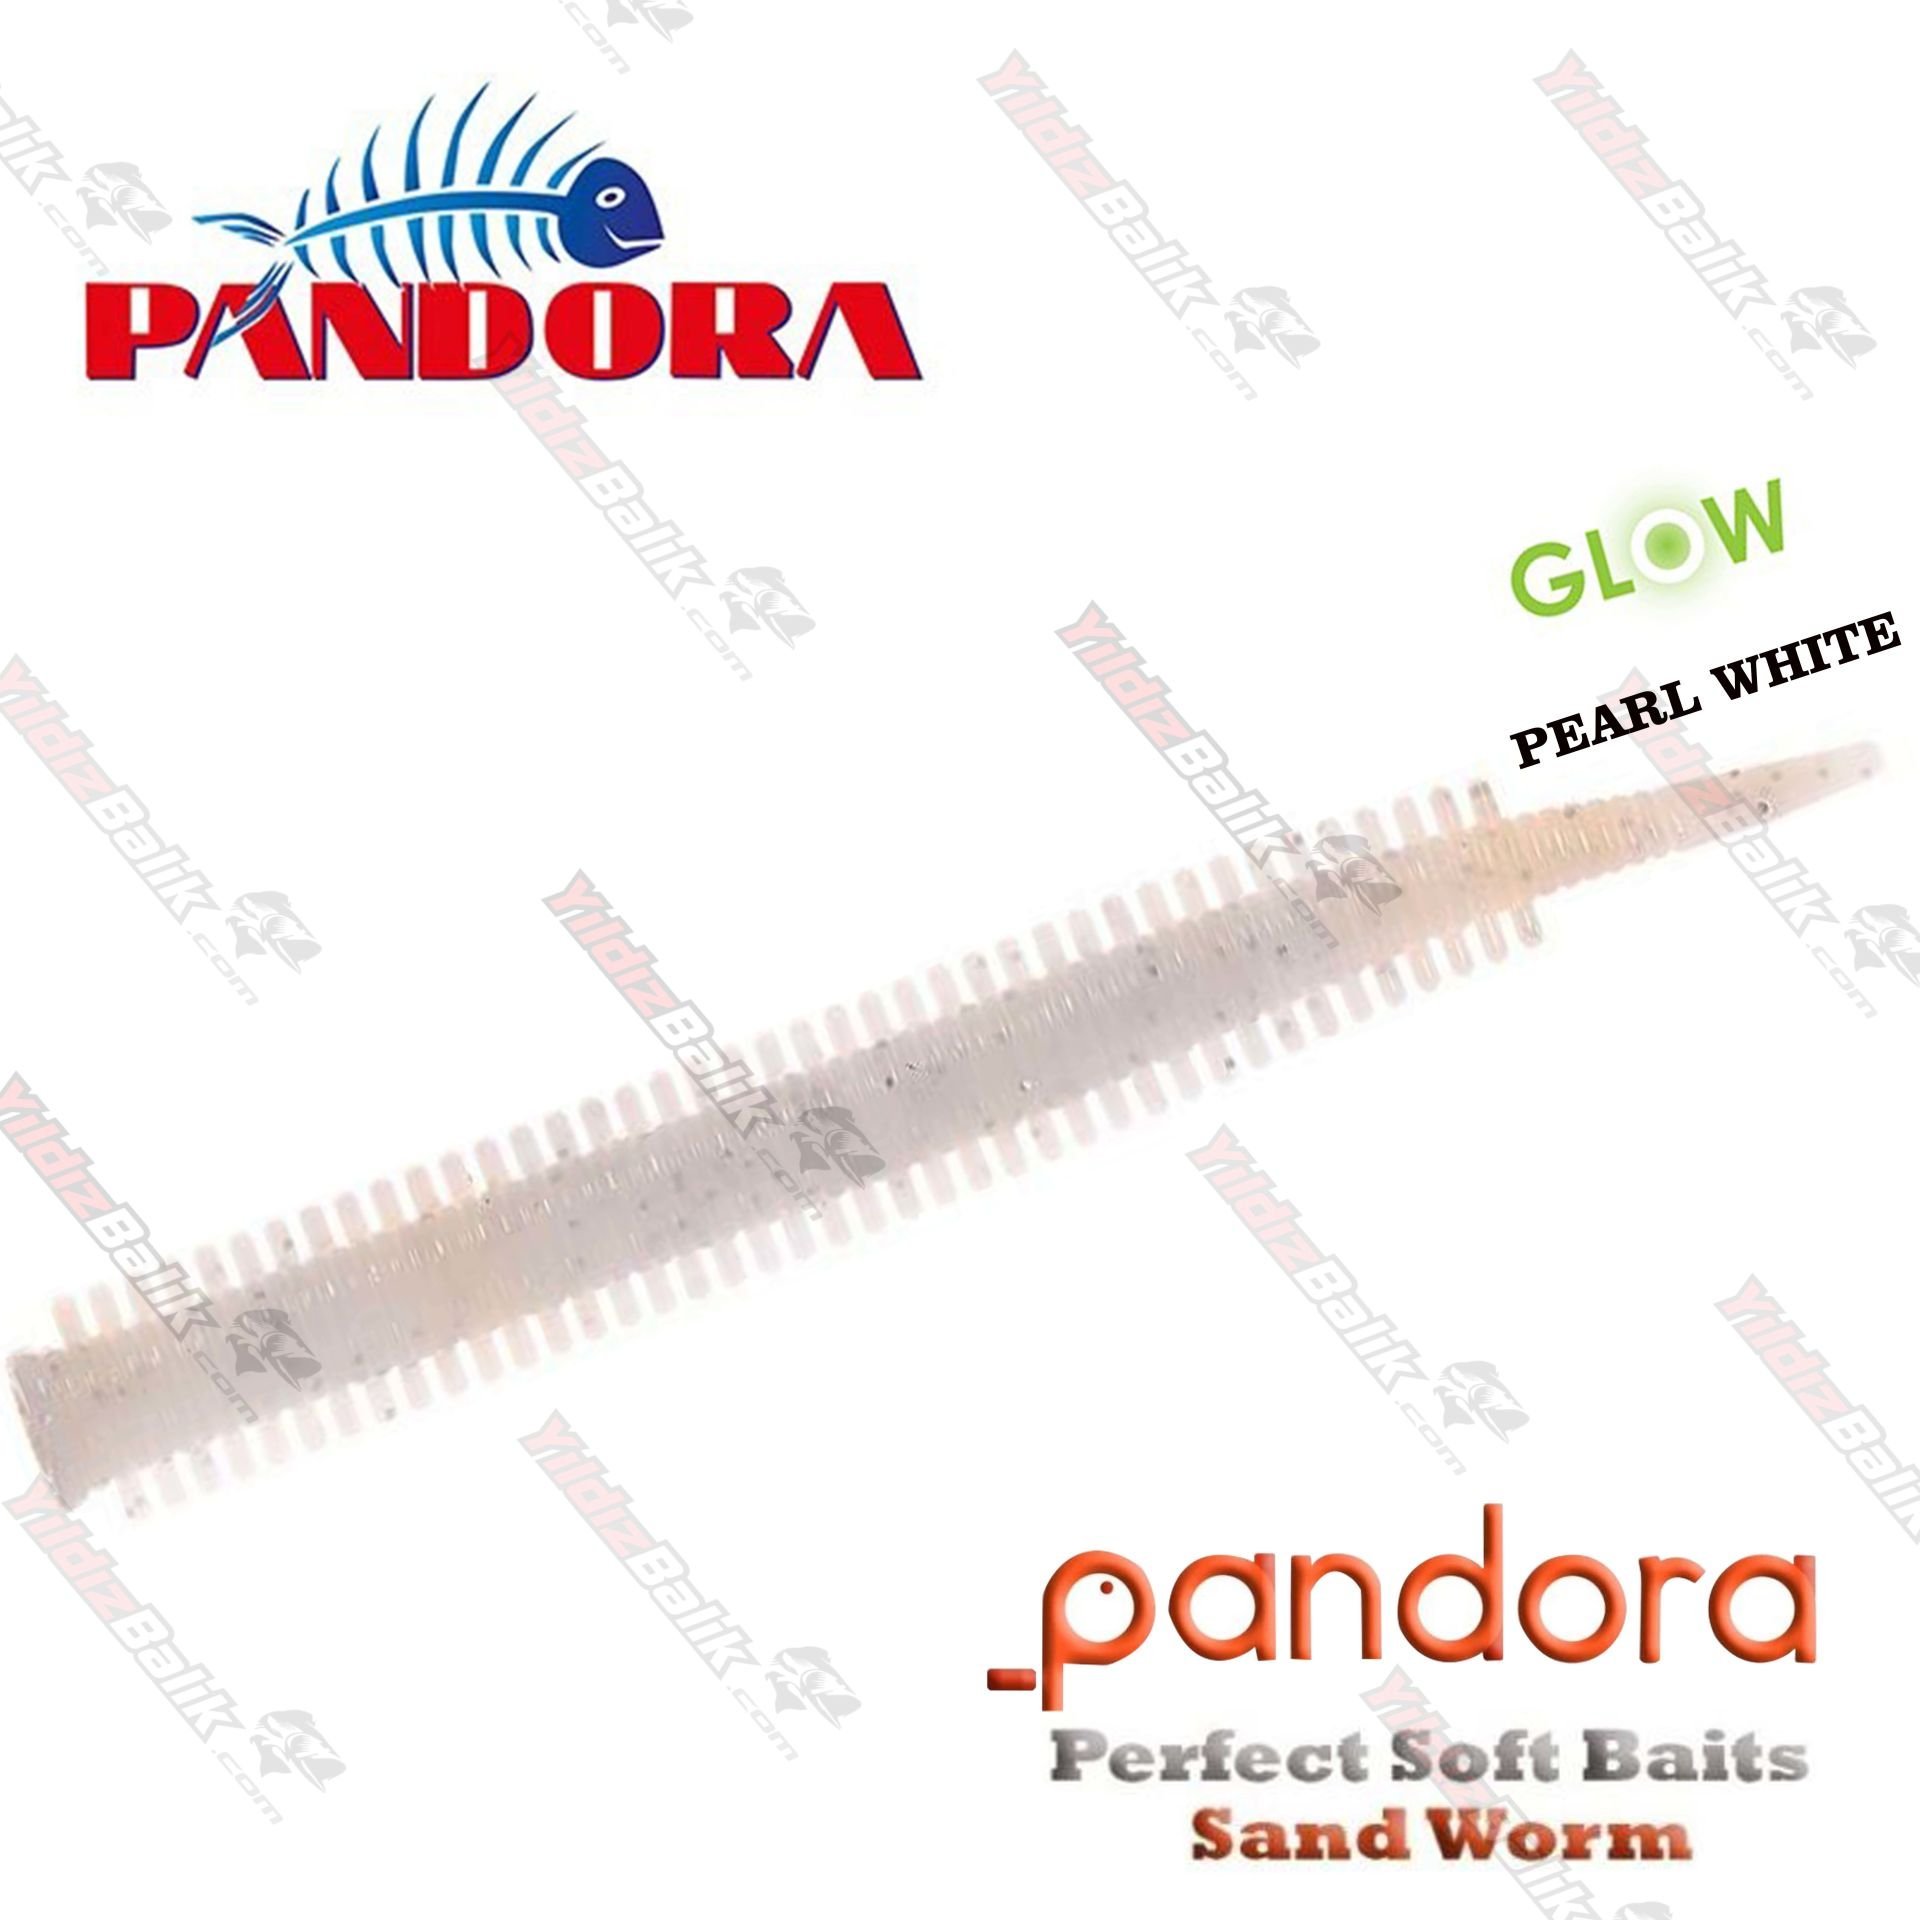 https://ideacdn.net/idea/as/57/myassets/products/795/pandora-perfect-soft-baits-sandworm-pearl-white.jpg?revision=1697143329